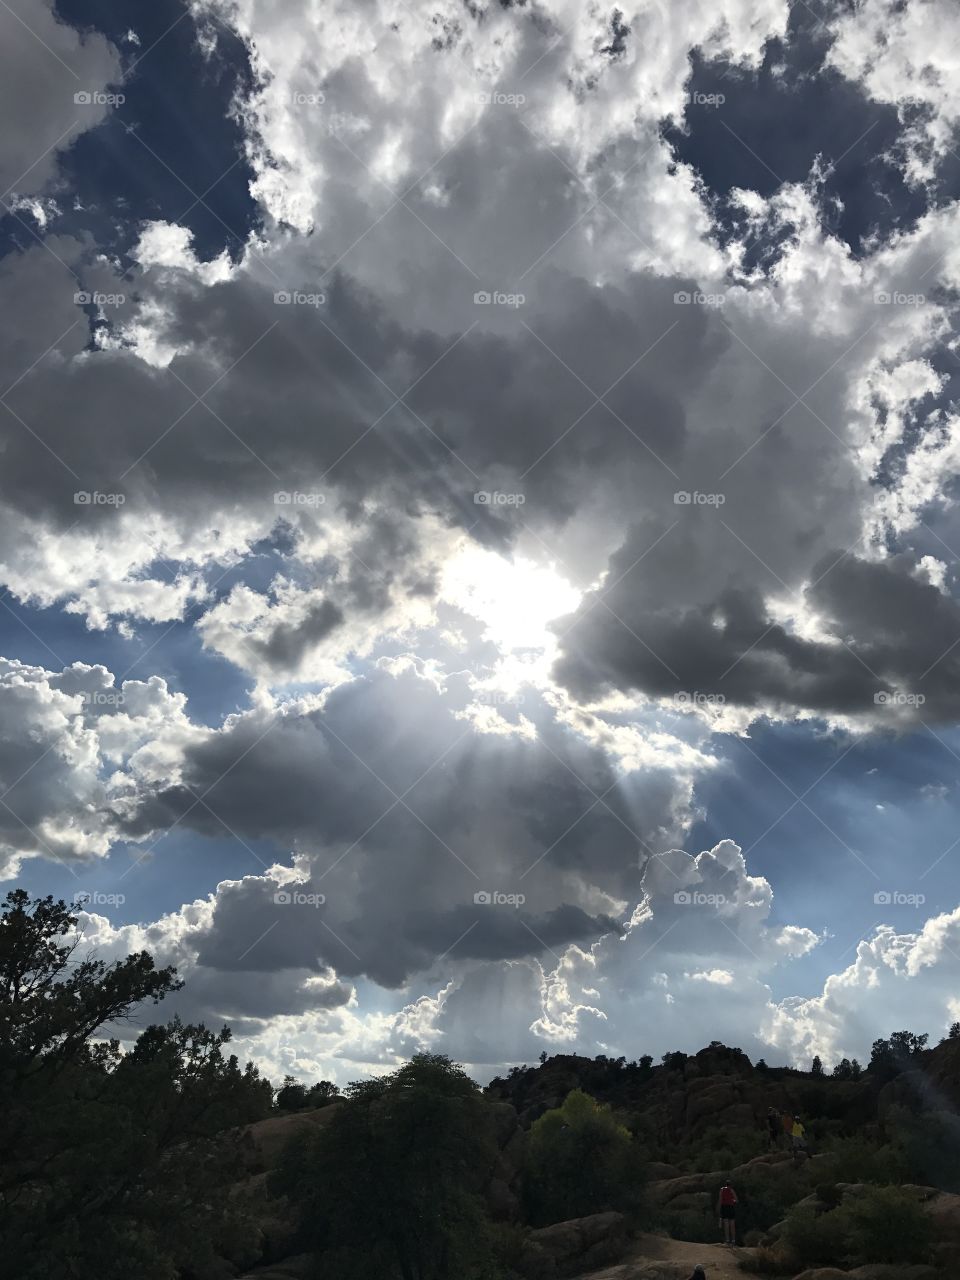 Dramatic sky in Prescott, Arizona. Deep, vivid blue sky broken up by clouds with an intense, glaring sun peeking through. 